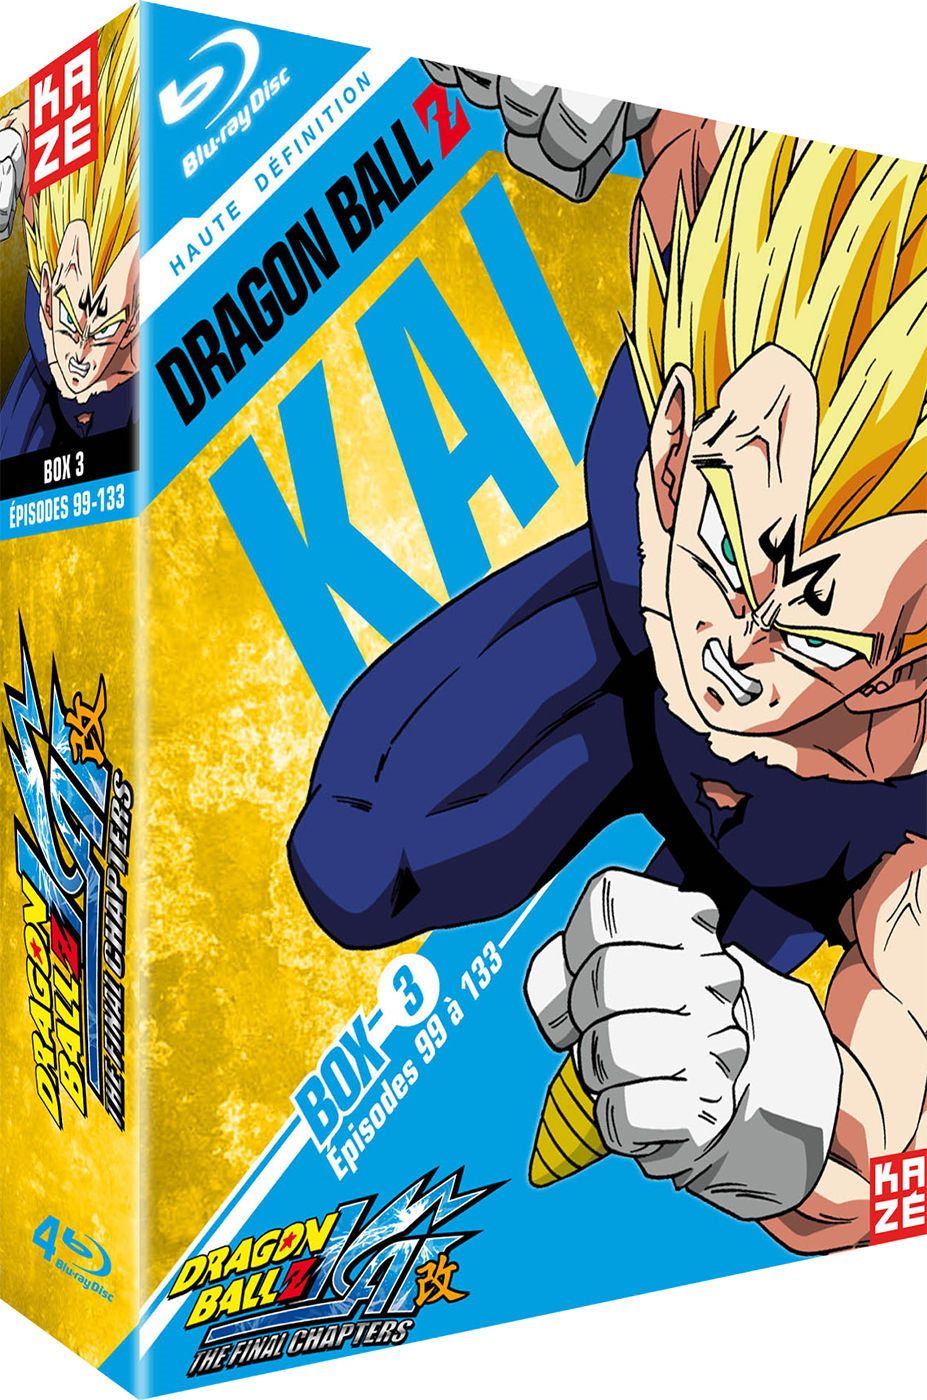 UK Anime Network - Dragon Ball Z Kai - Eps. 1-17 (TV broadcast)